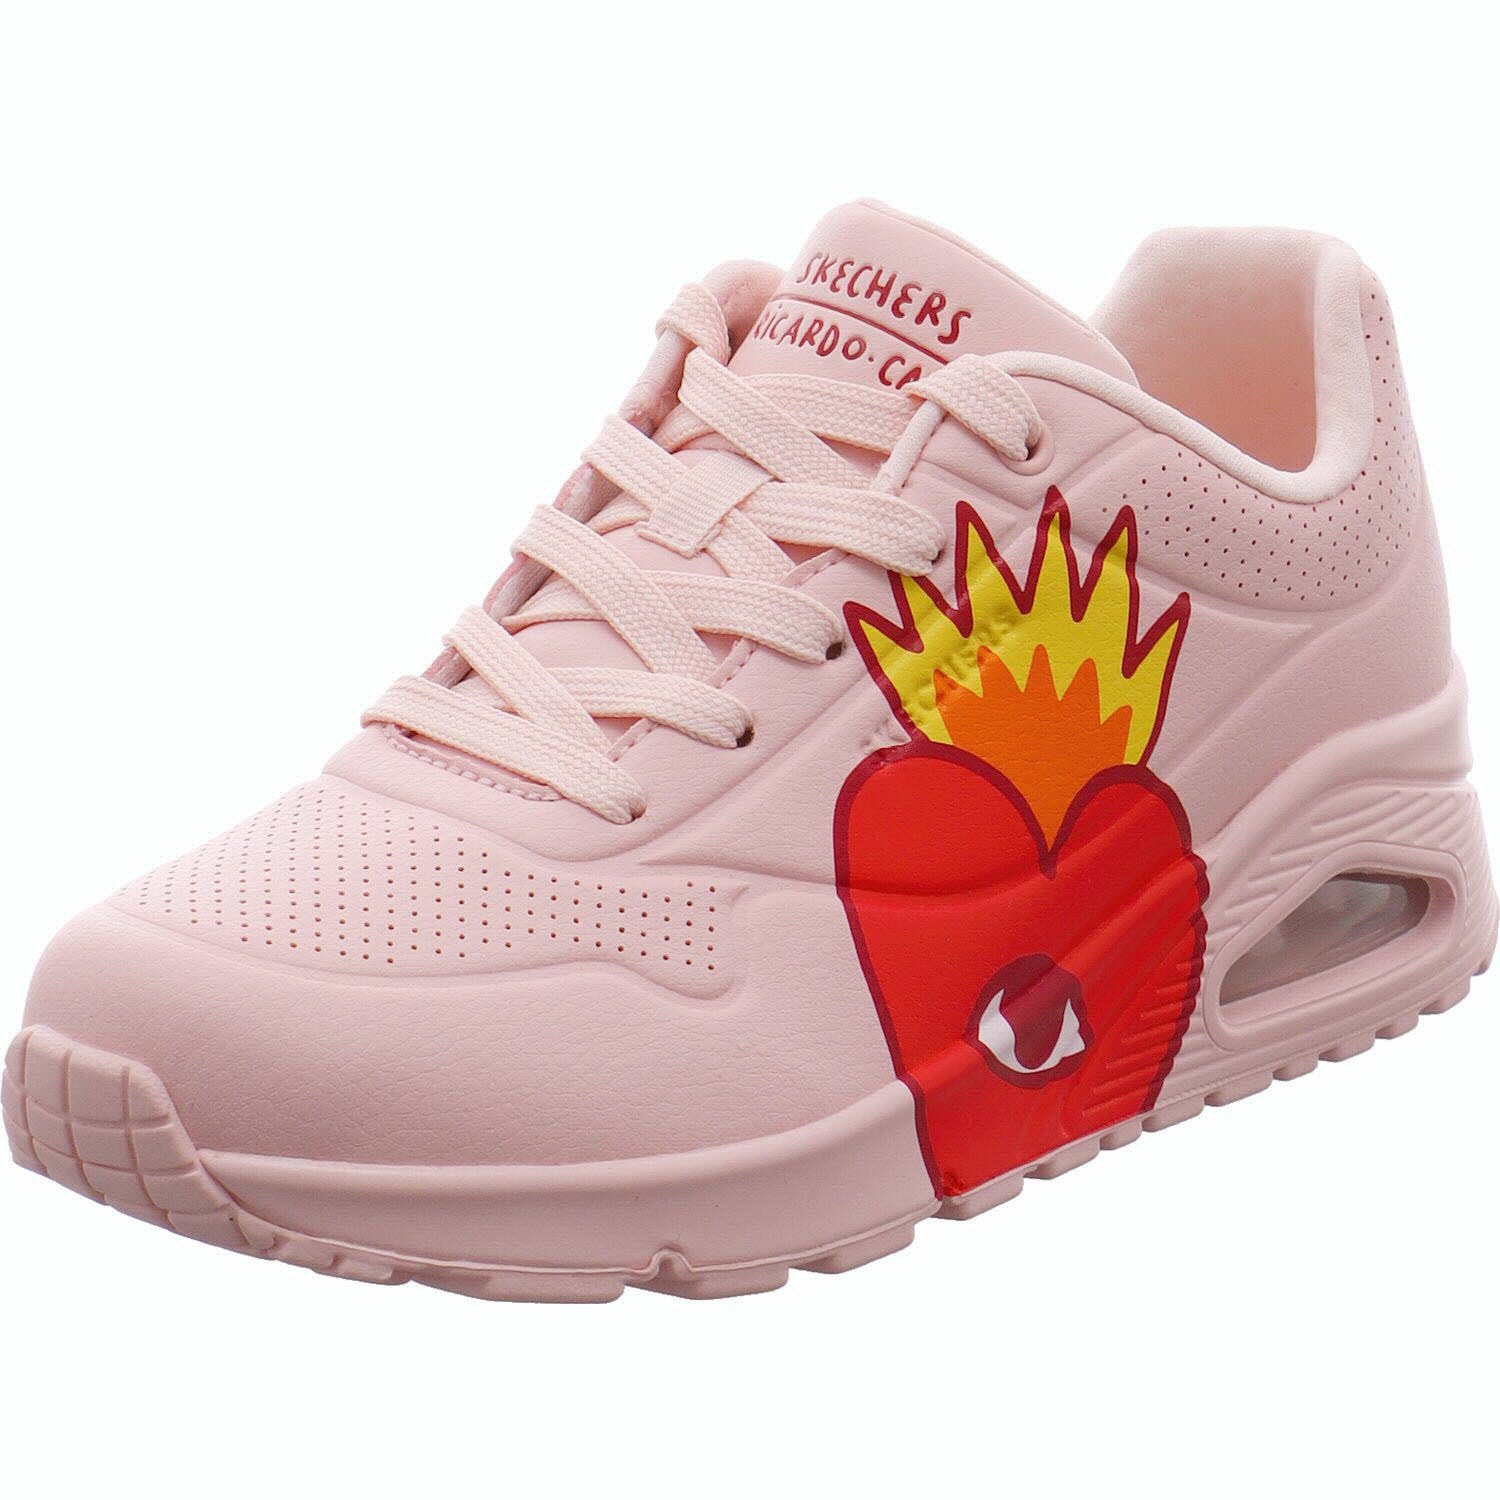 Sneaker Uno Heart Skechers - Flaming